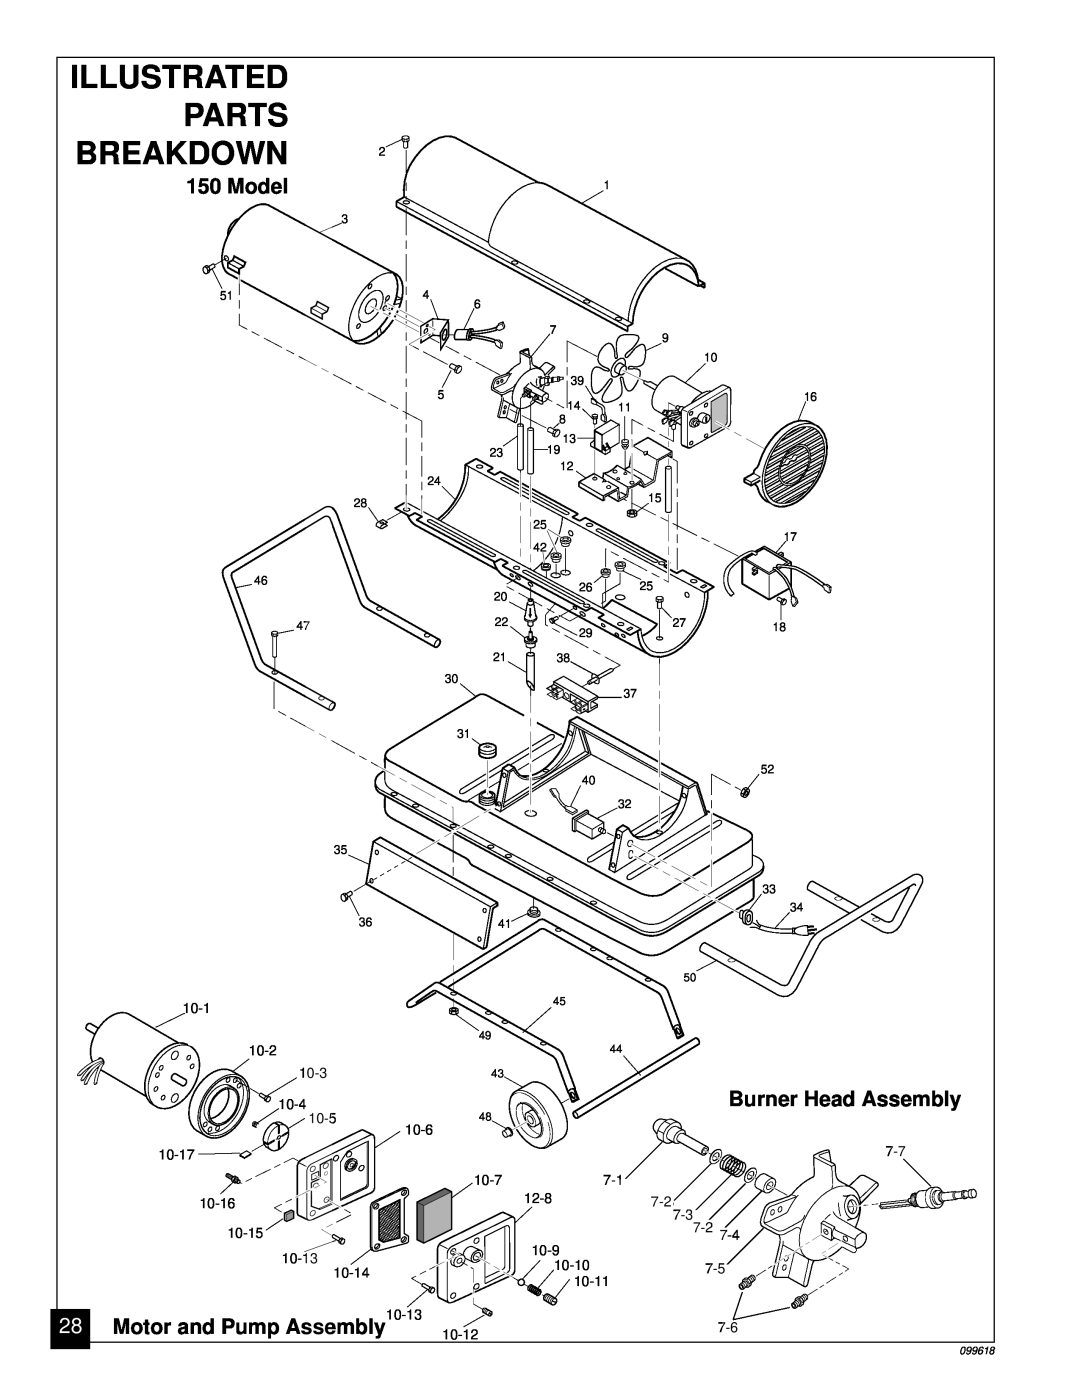 Desa 50 owner manual Illustrated, Parts, Breakdown, Model, Burner Head Assembly, Motor and Pump Assembly10-13 